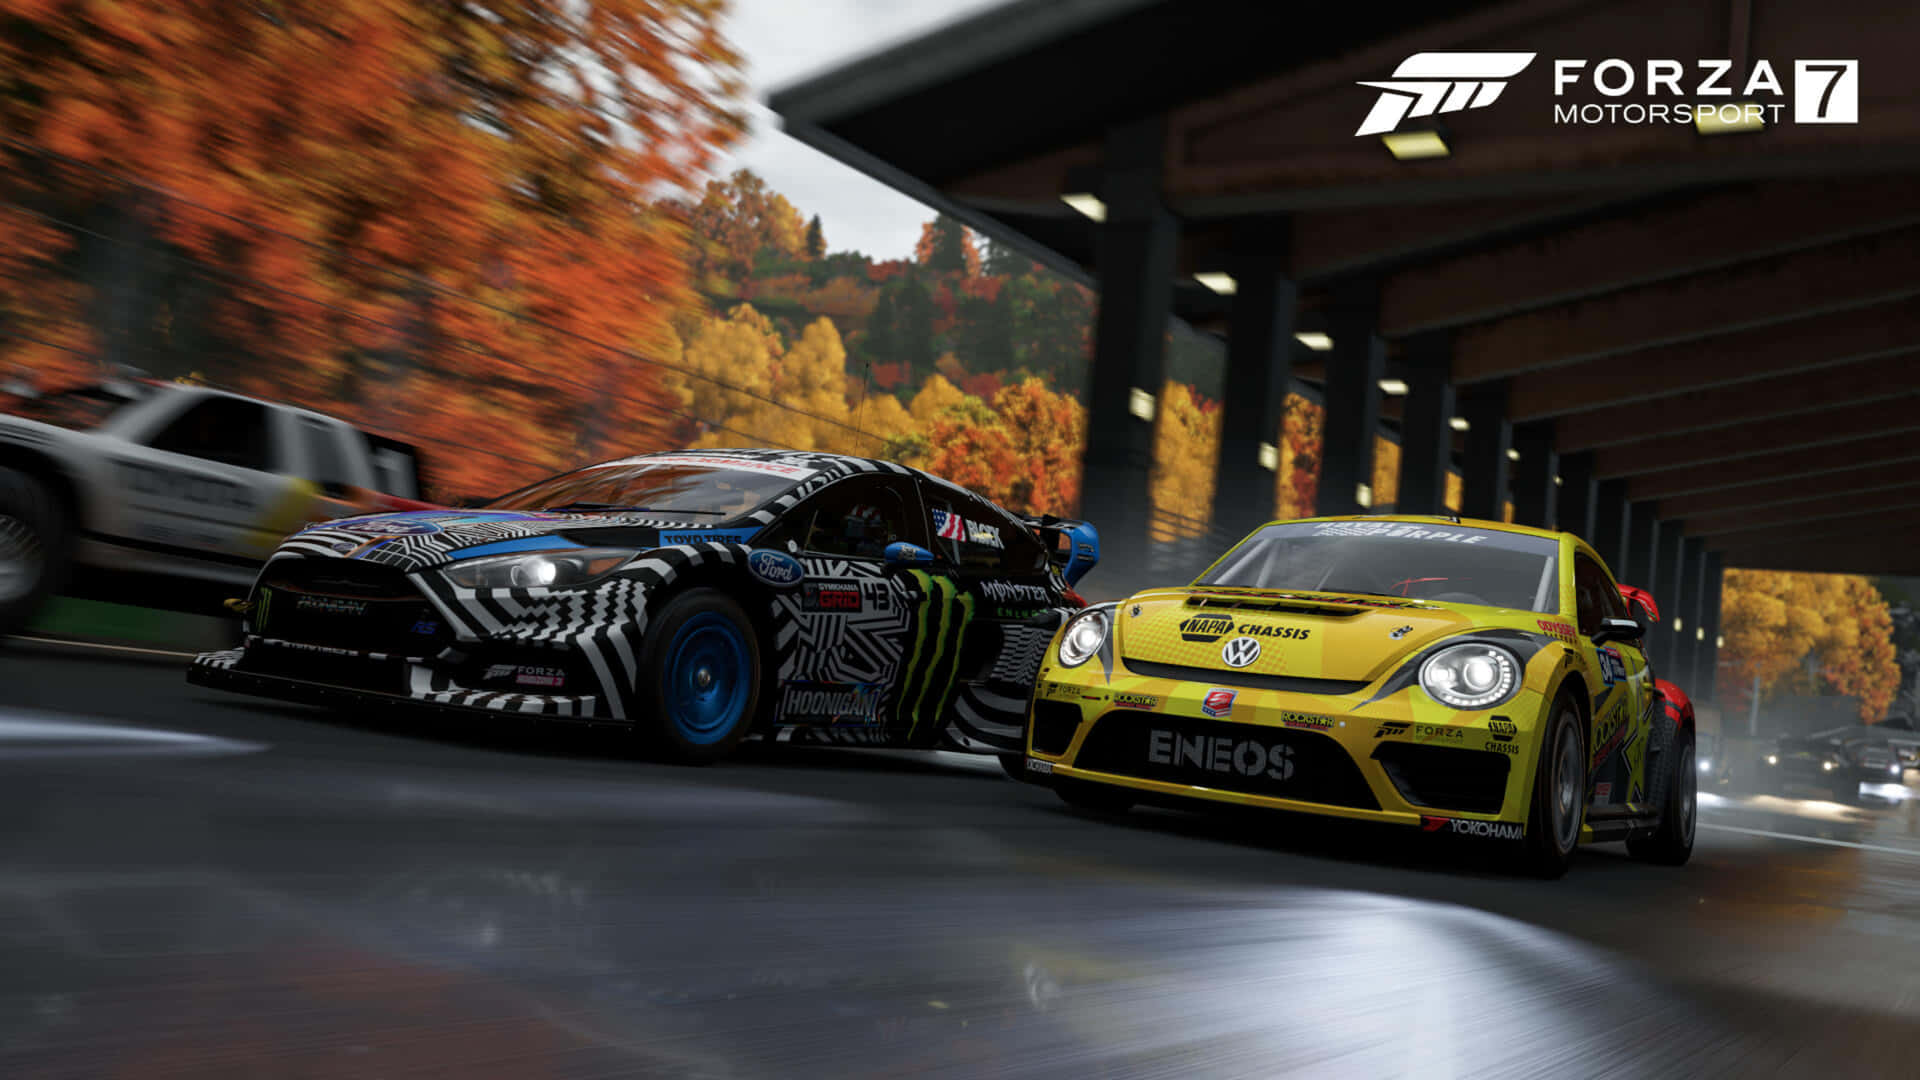 4k Forza Motorsport 7 Background Wallpaper